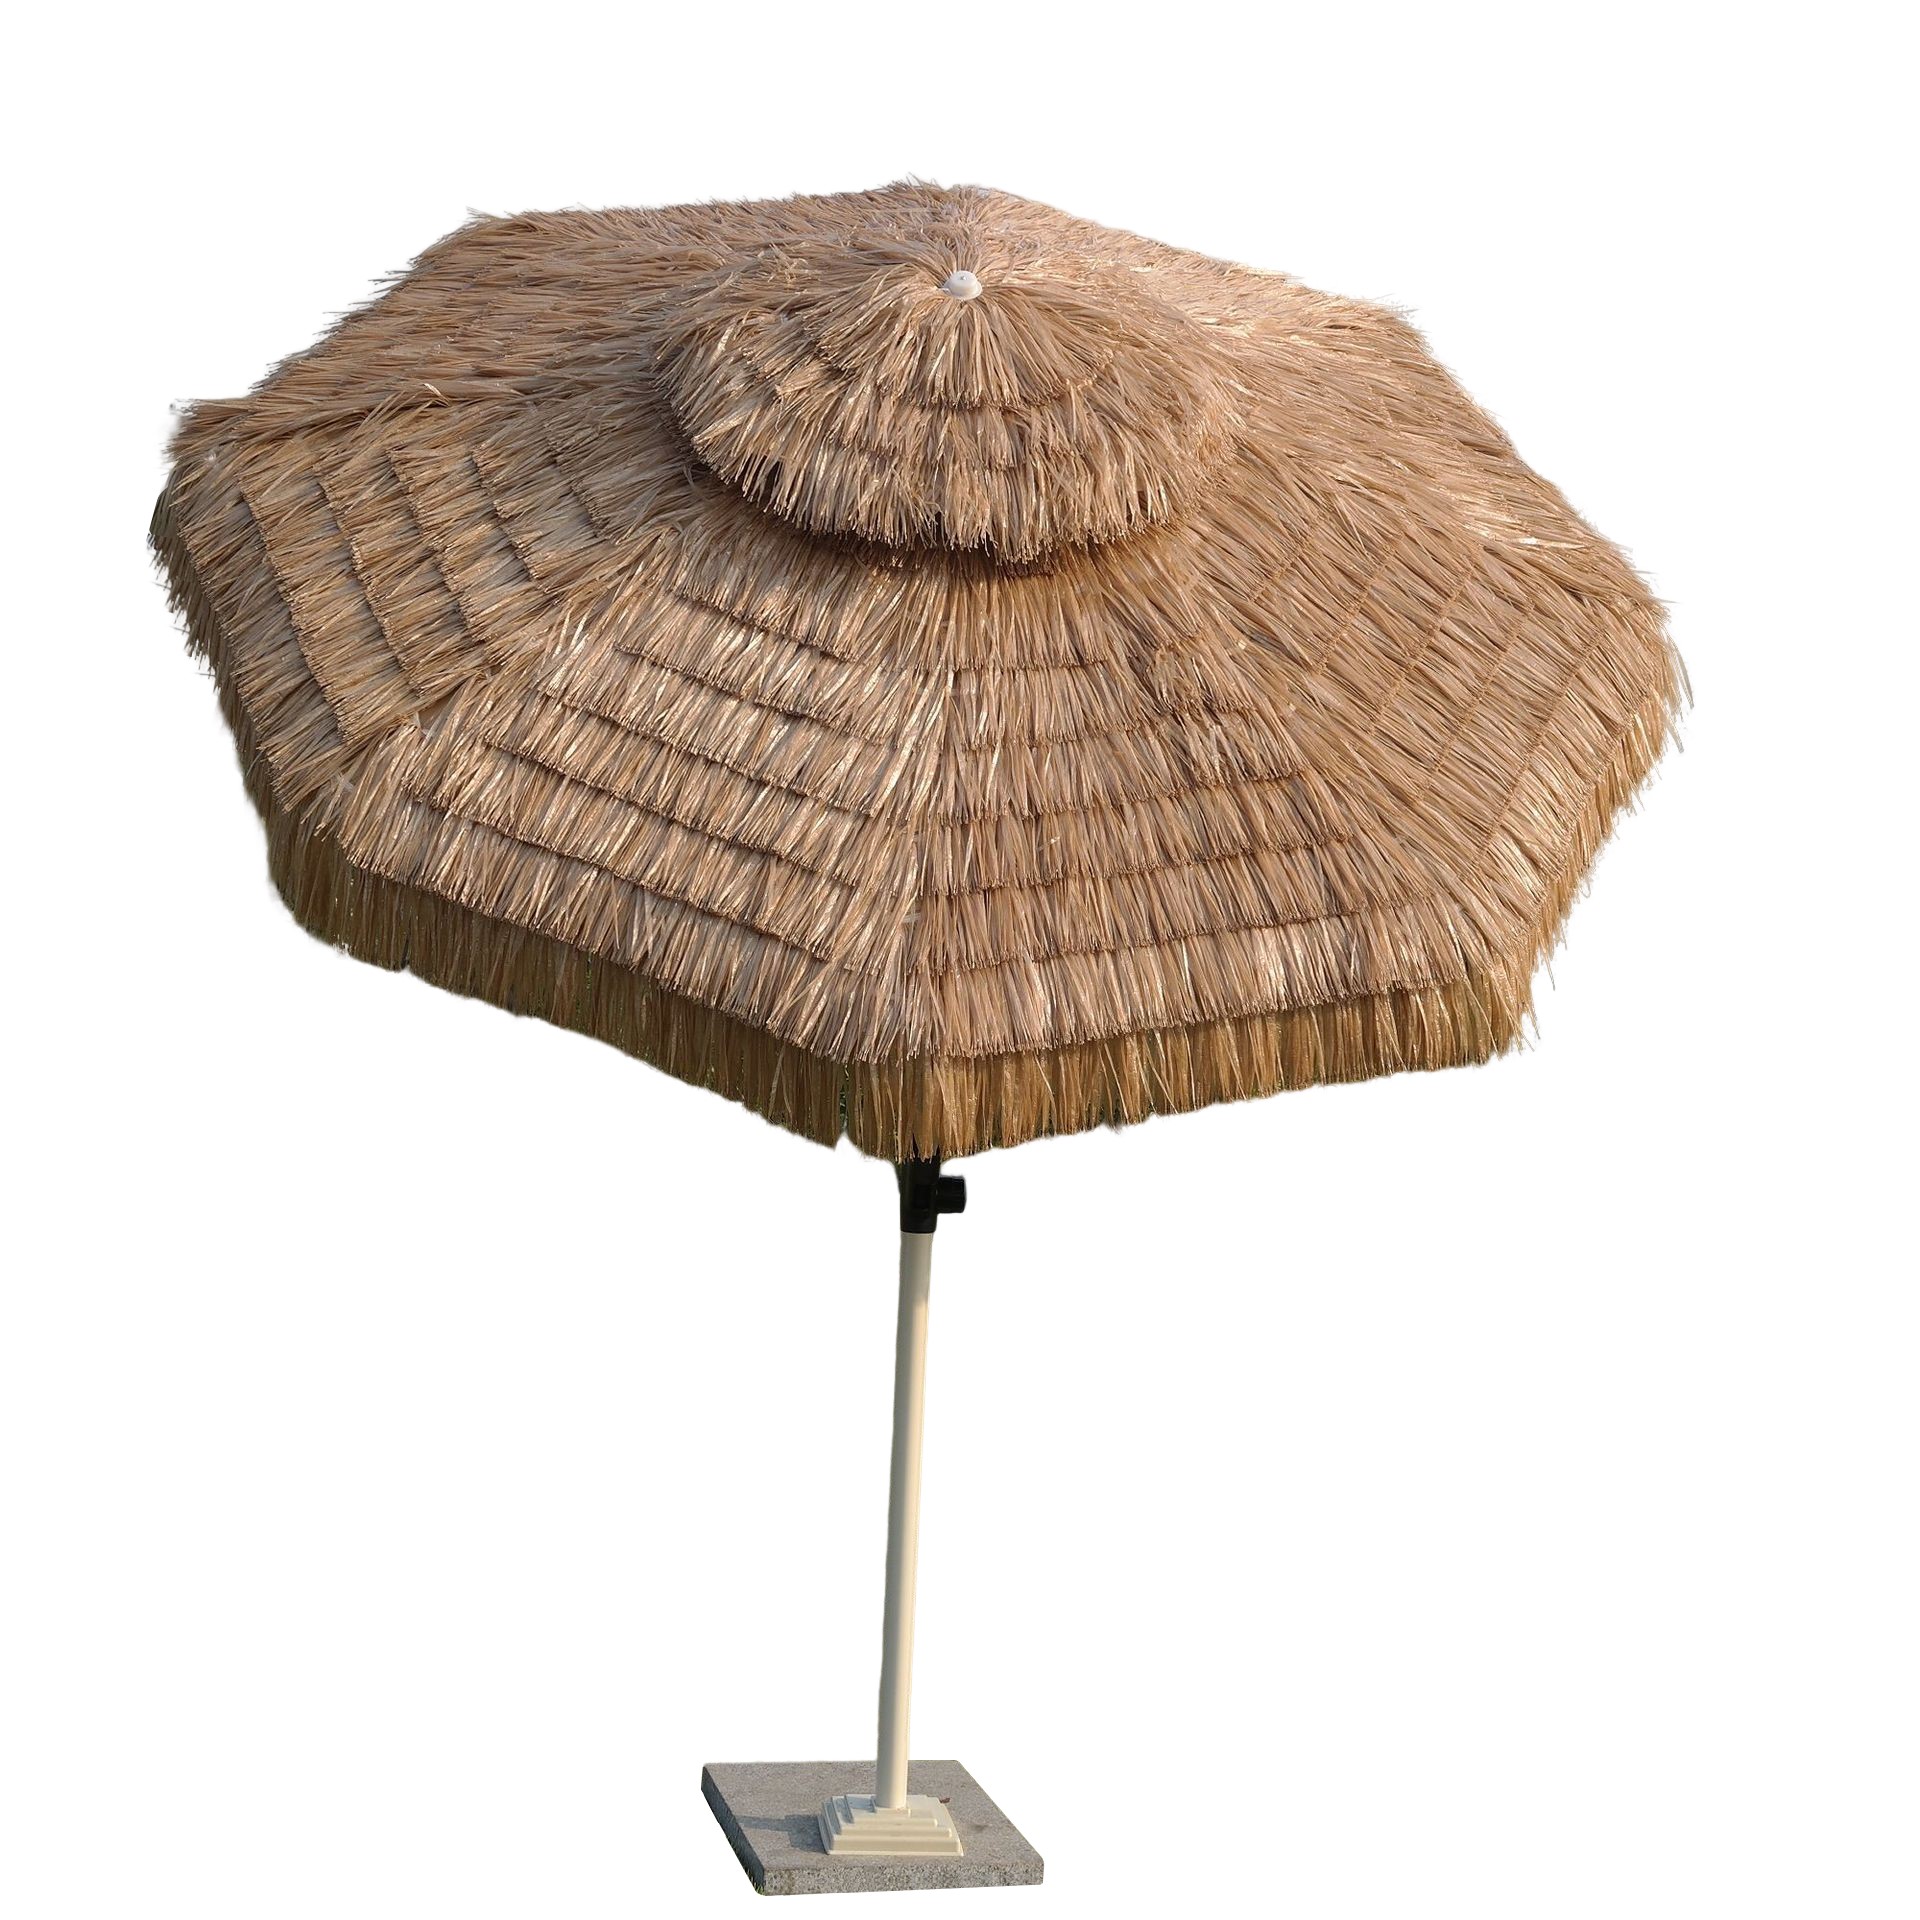 Round Outdoor Simulated Straw Parasol Sun Umbrella - Sun Umbrella| Shinlin Outdoor Parasol Straw Umbrella SU002